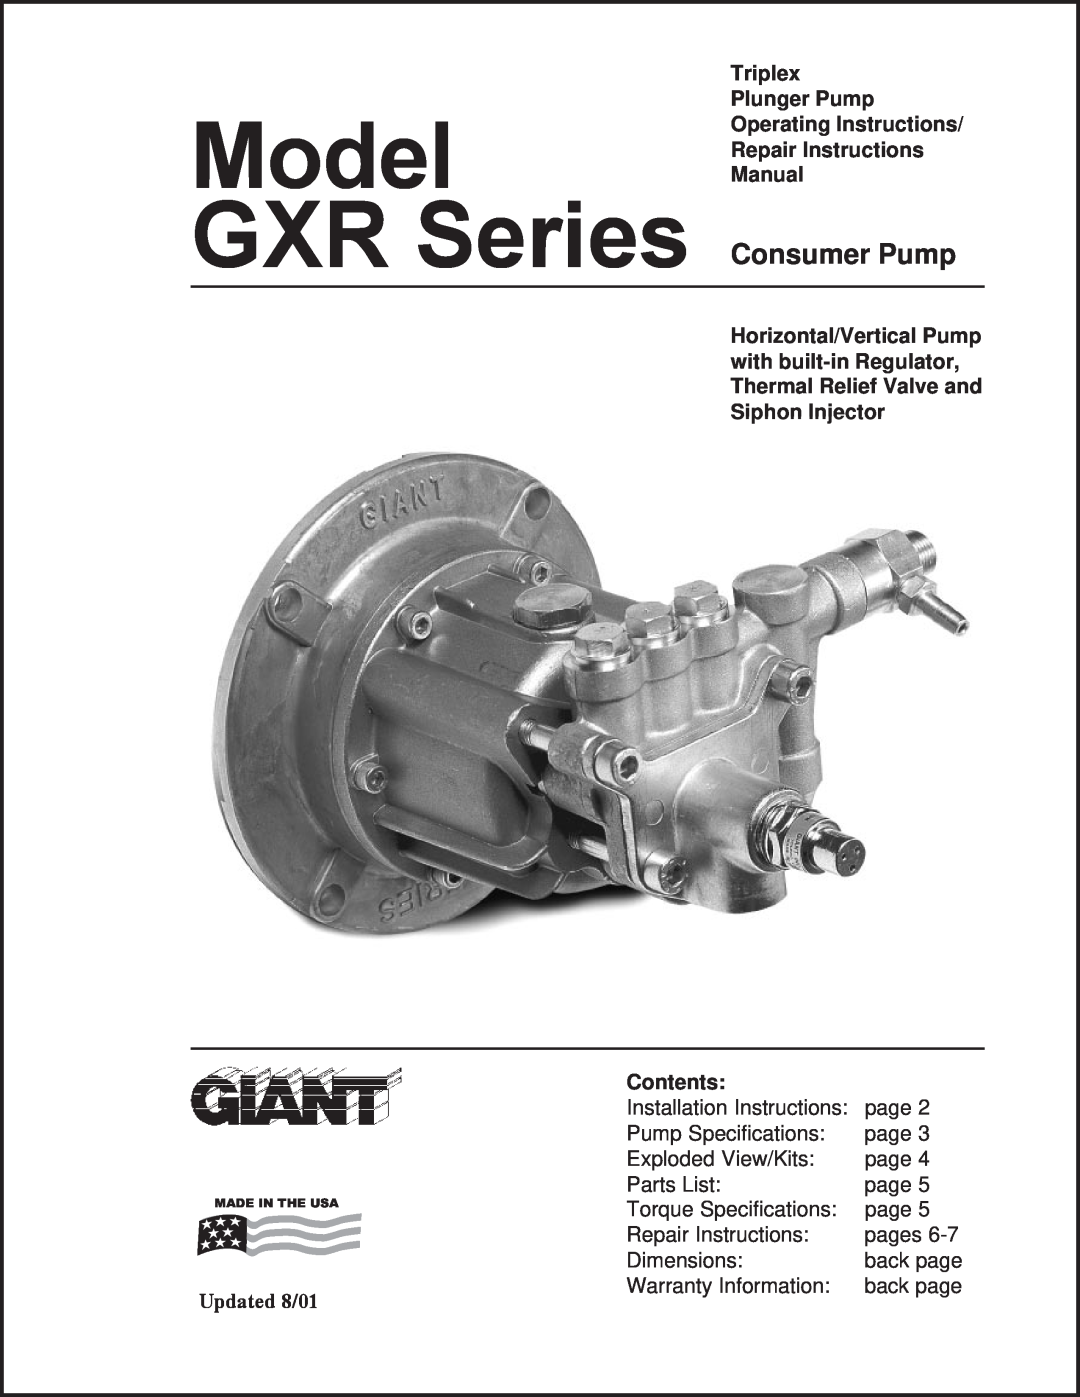 Giant GXR installation instructions Consumer Pump, Triplex Plunger Pump Operating Instructions Repair Instructions, Manual 